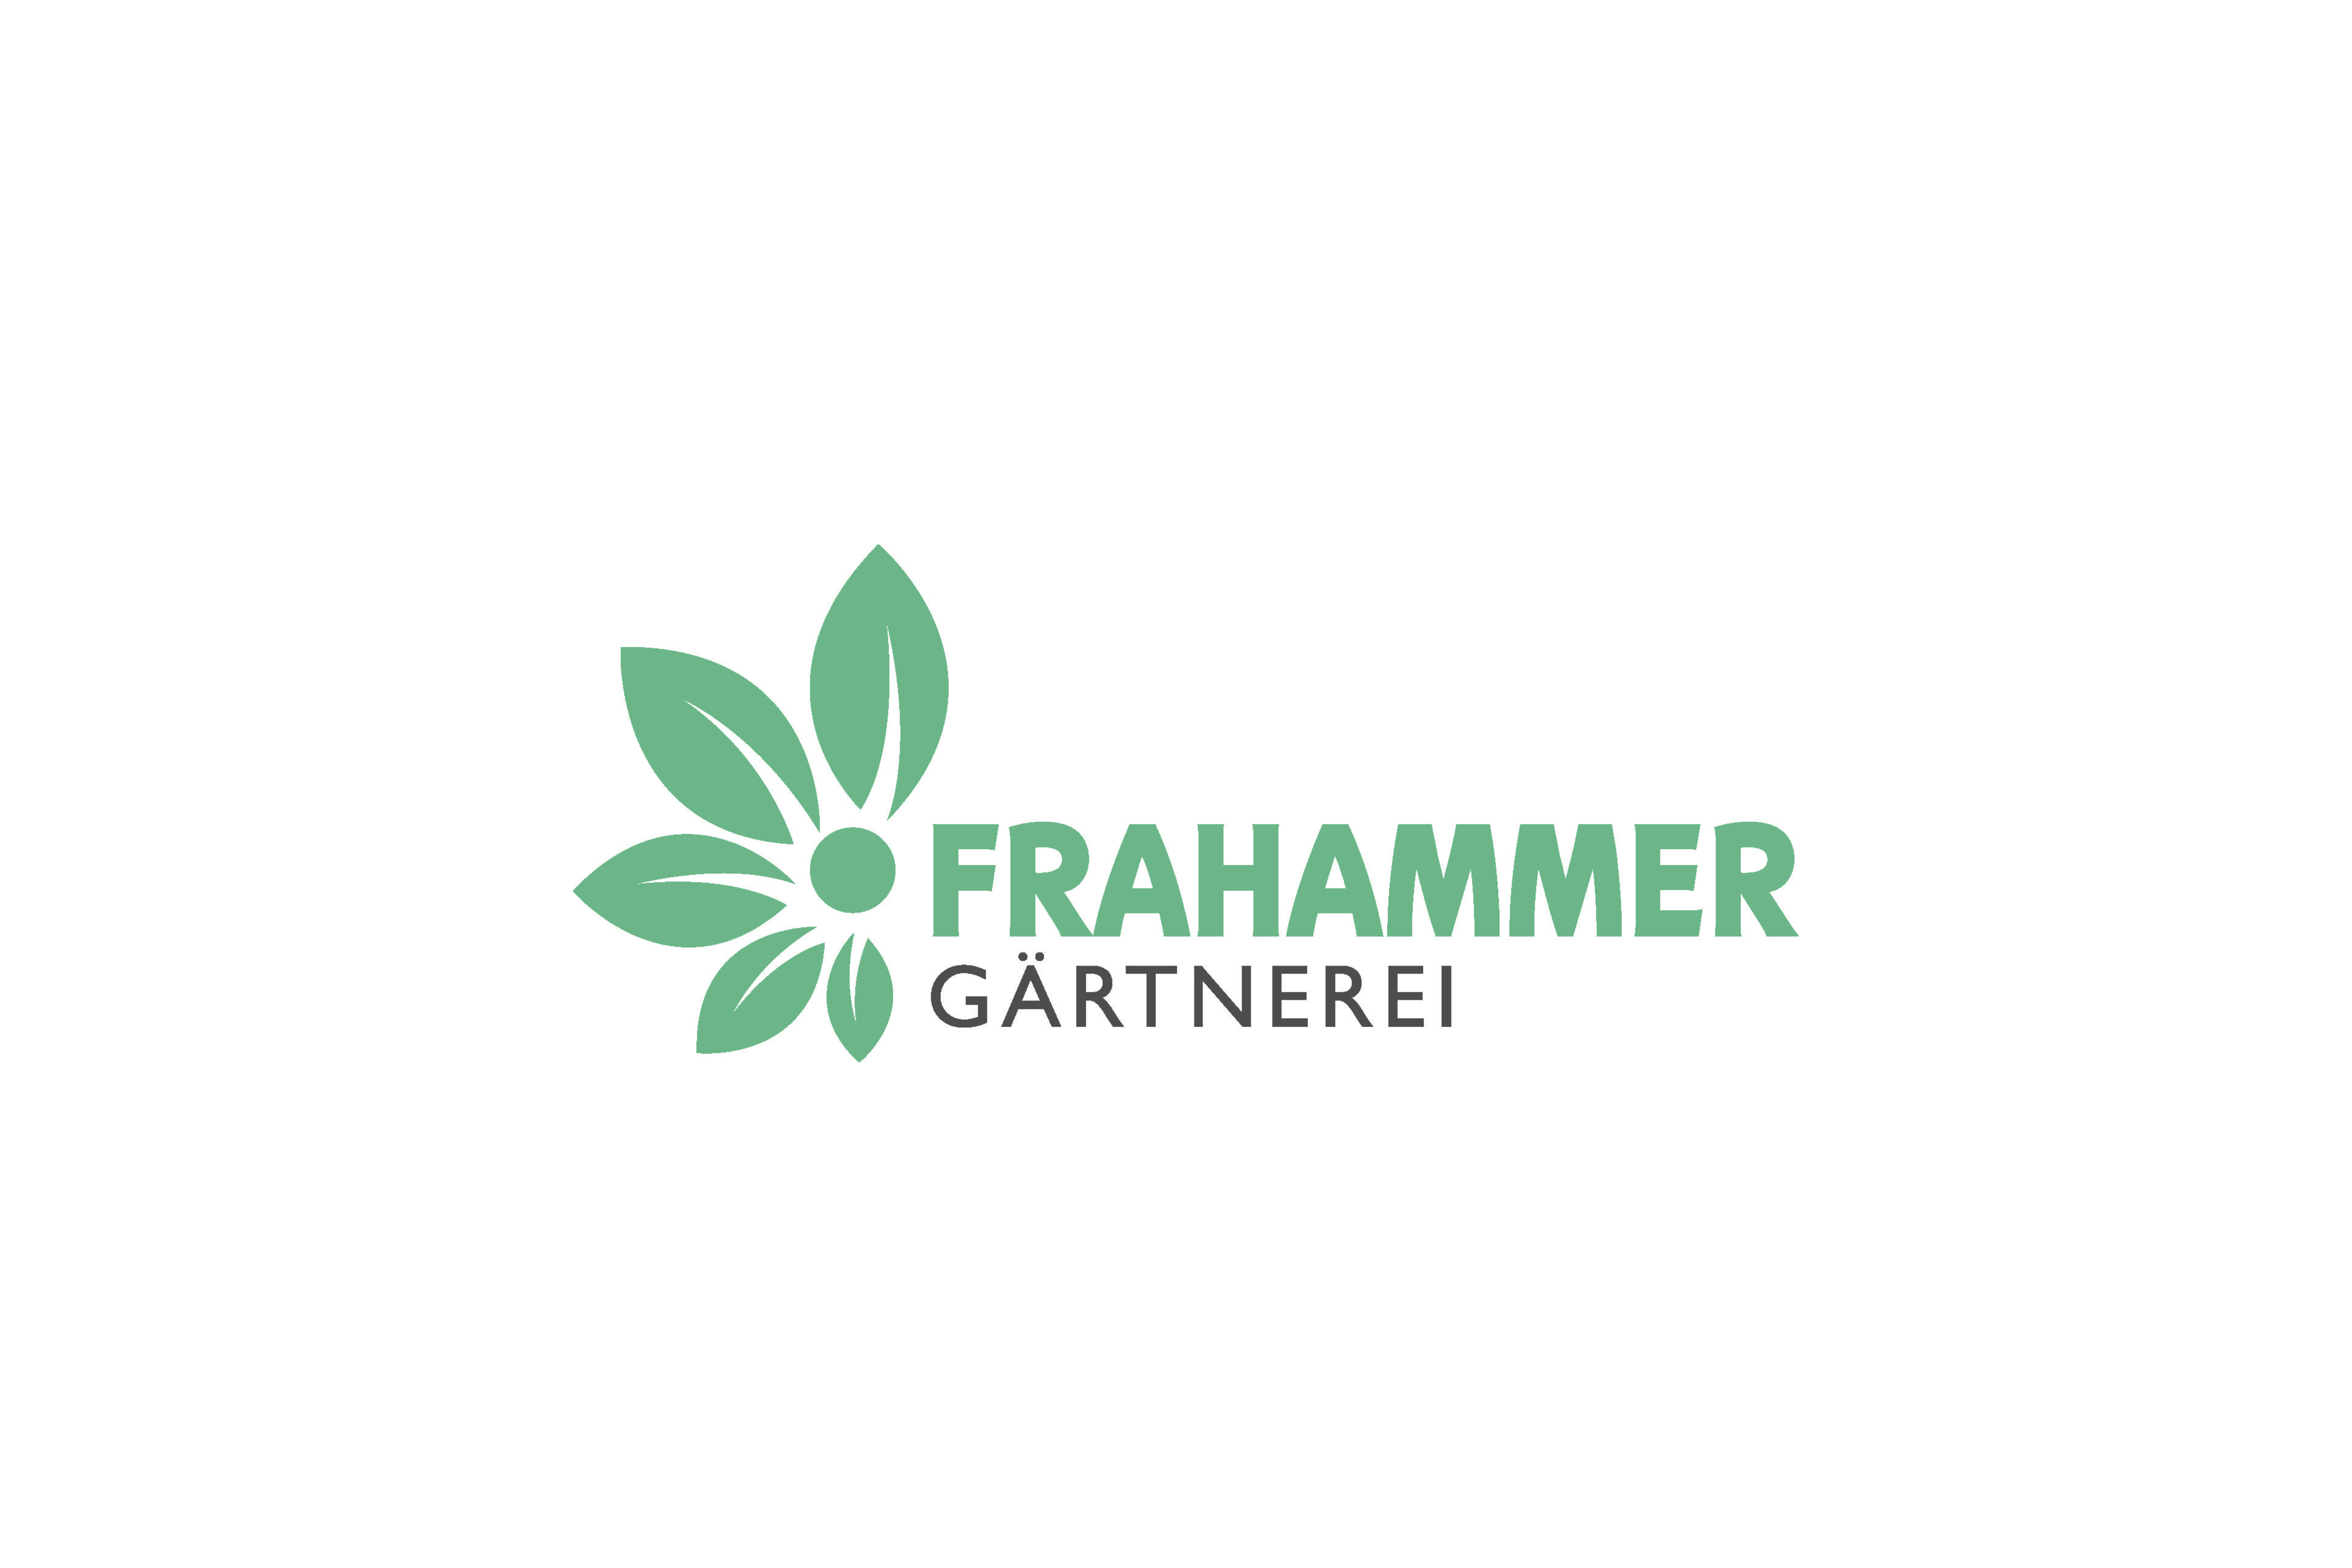 Gärtnerei Frahammer - Josef Frahammer bei Salzburg schmeckt